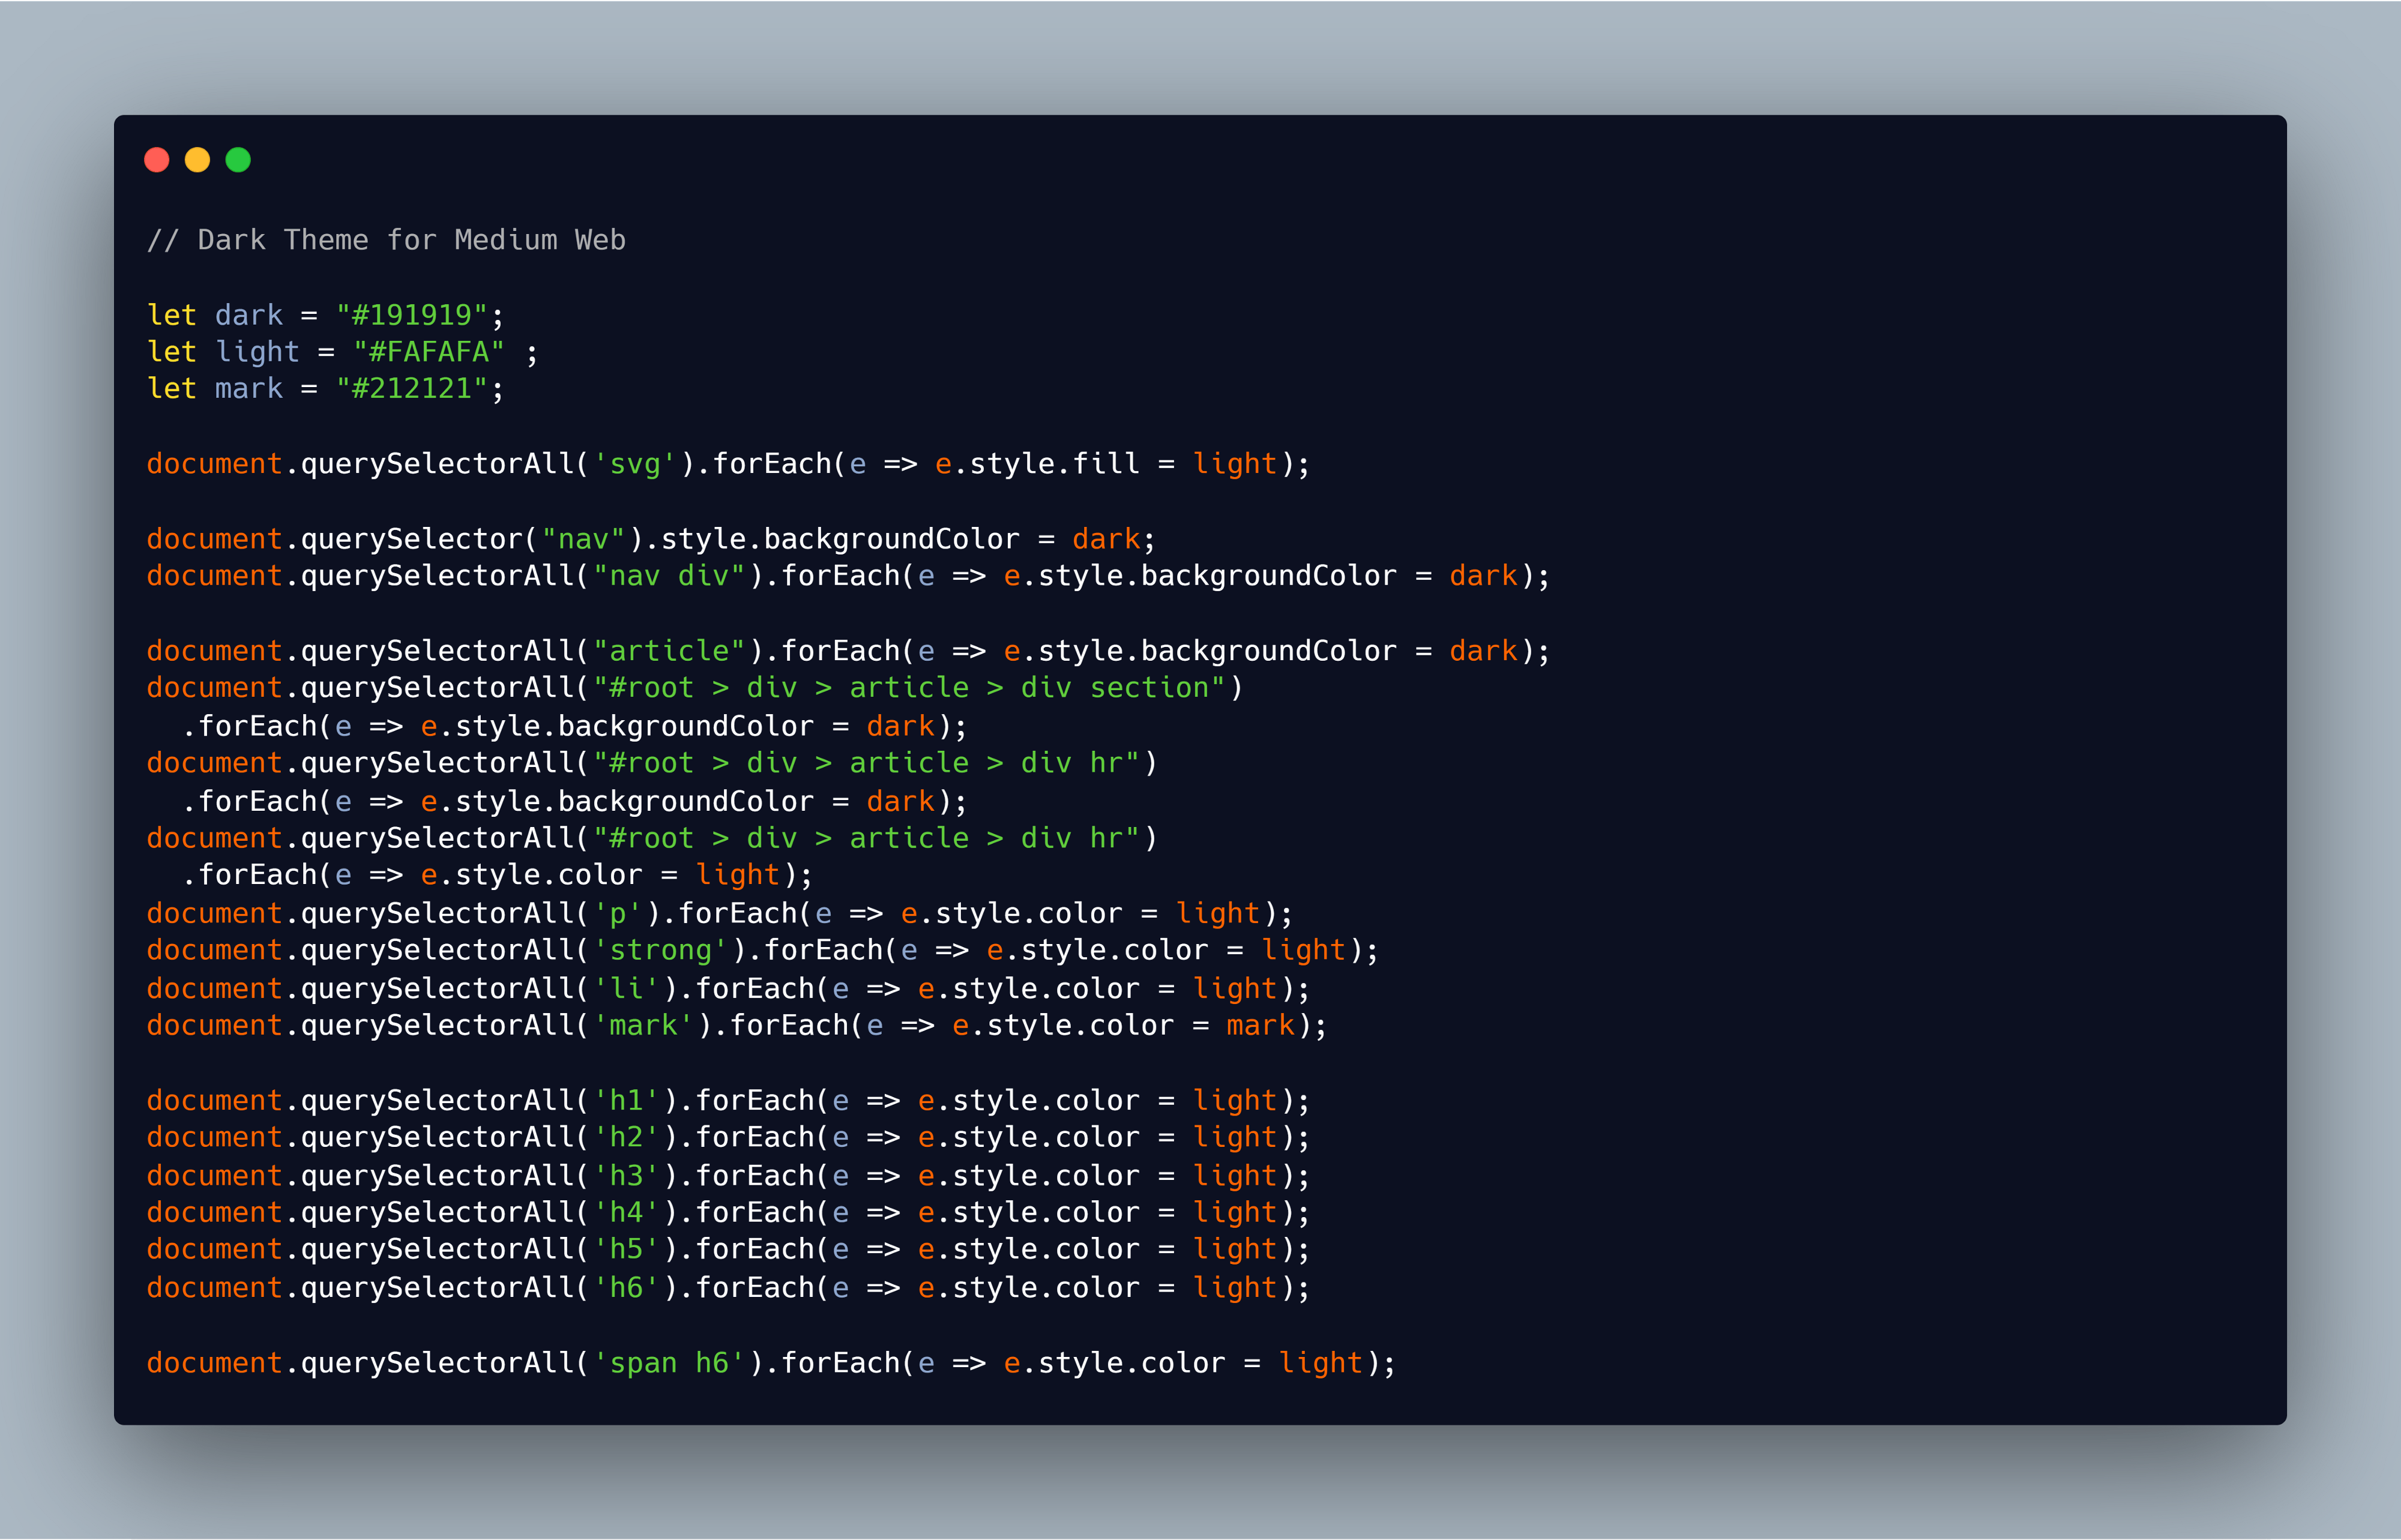 Javascript Code for Dark Theme